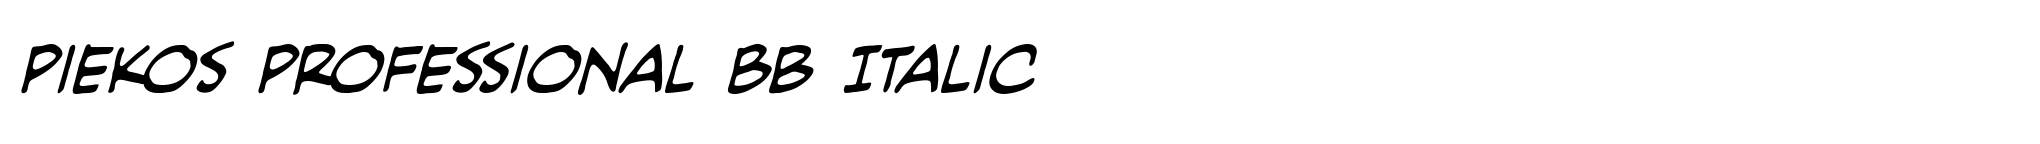 Piekos Professional BB Italic image